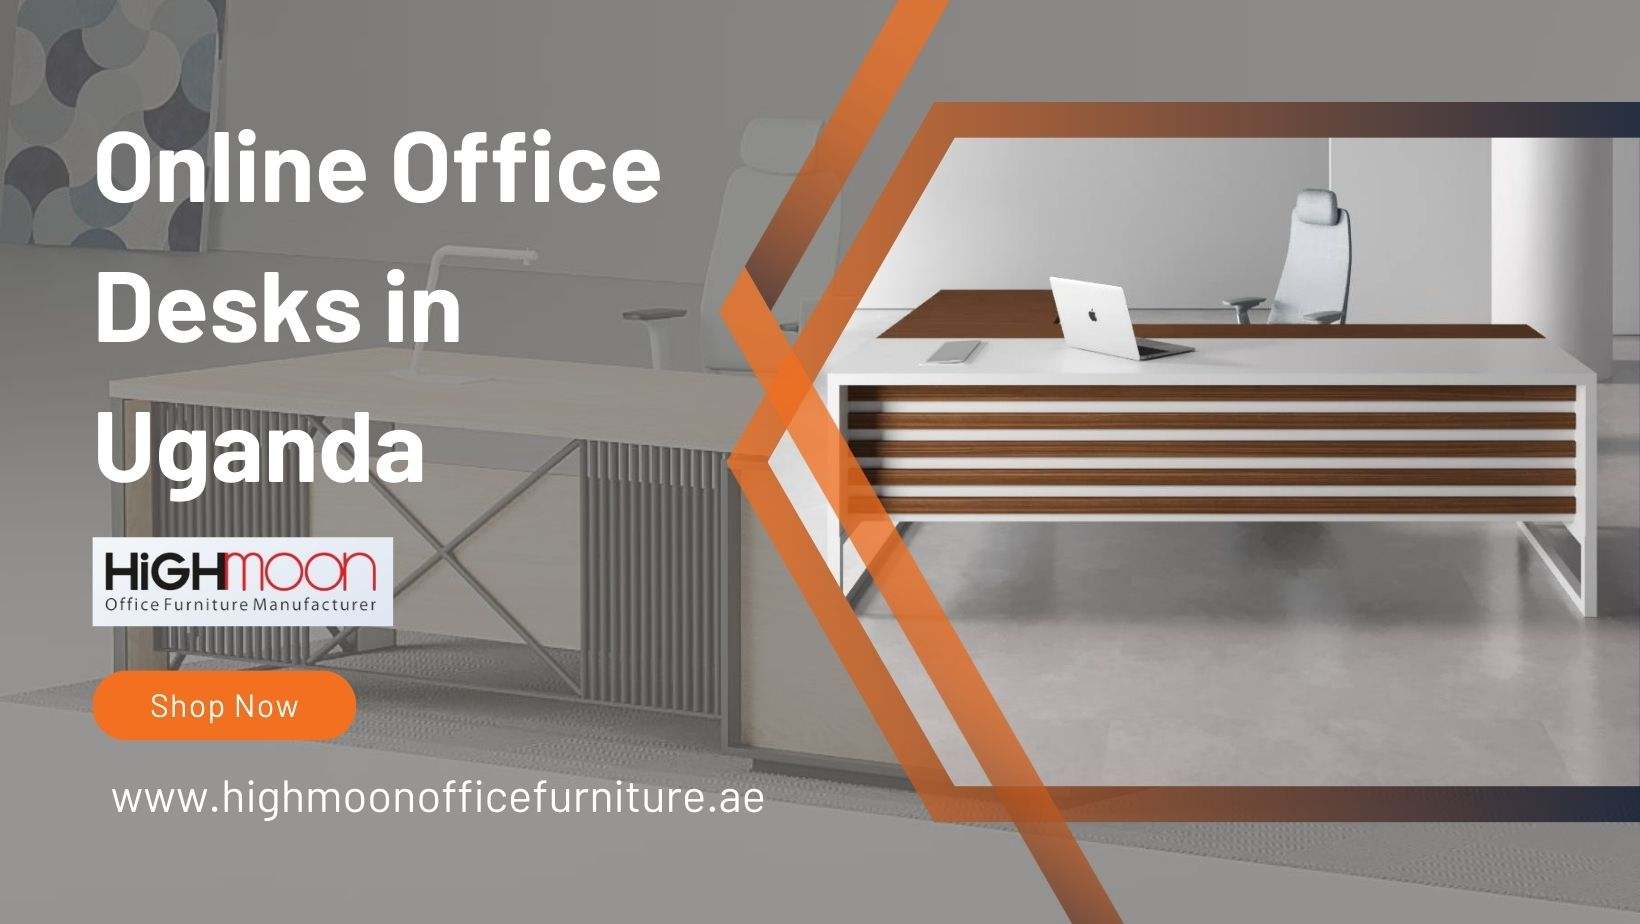 Online Office Desks in Uganda